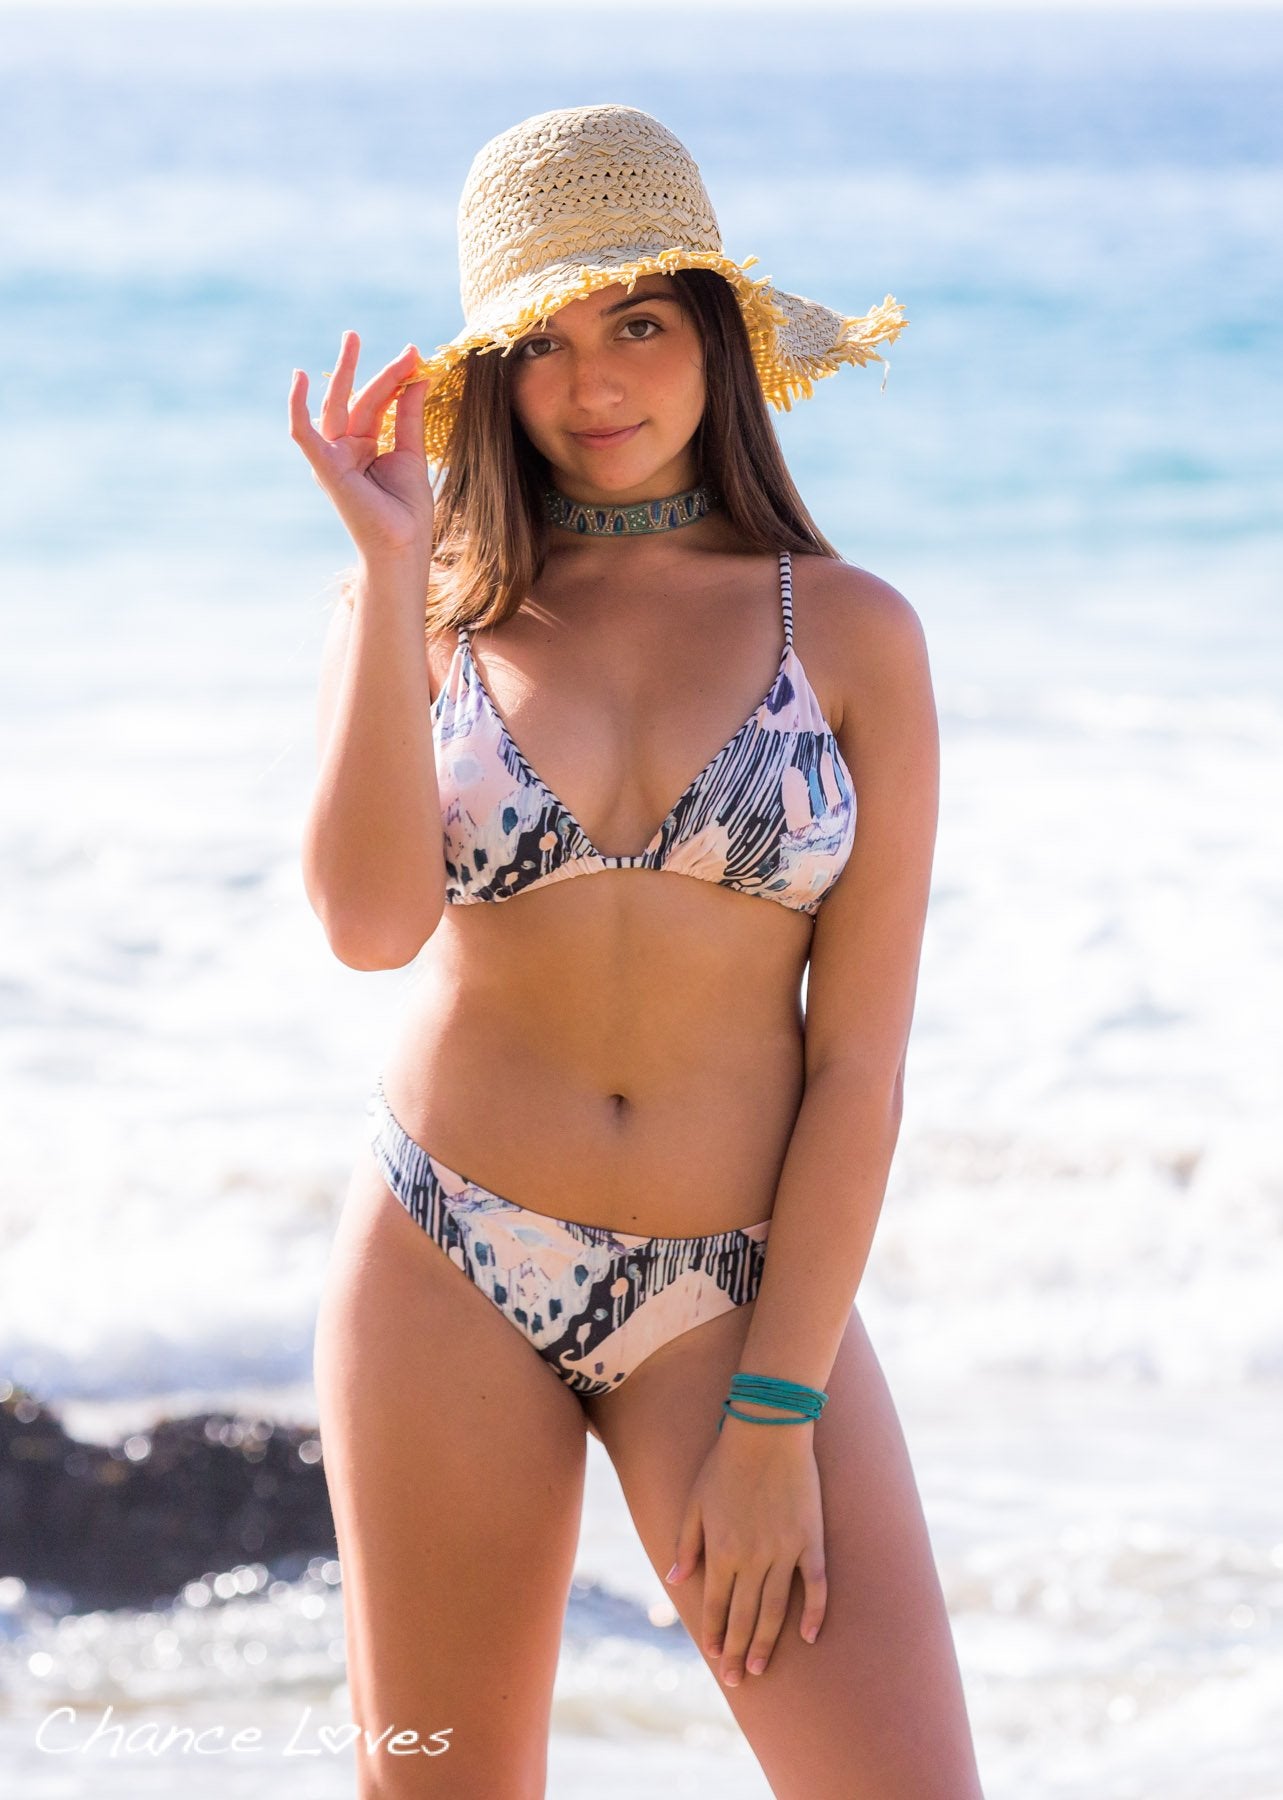 Beautiful young woman at the beach in front of amazing blue water, wearing an amazing reversible Bikini.